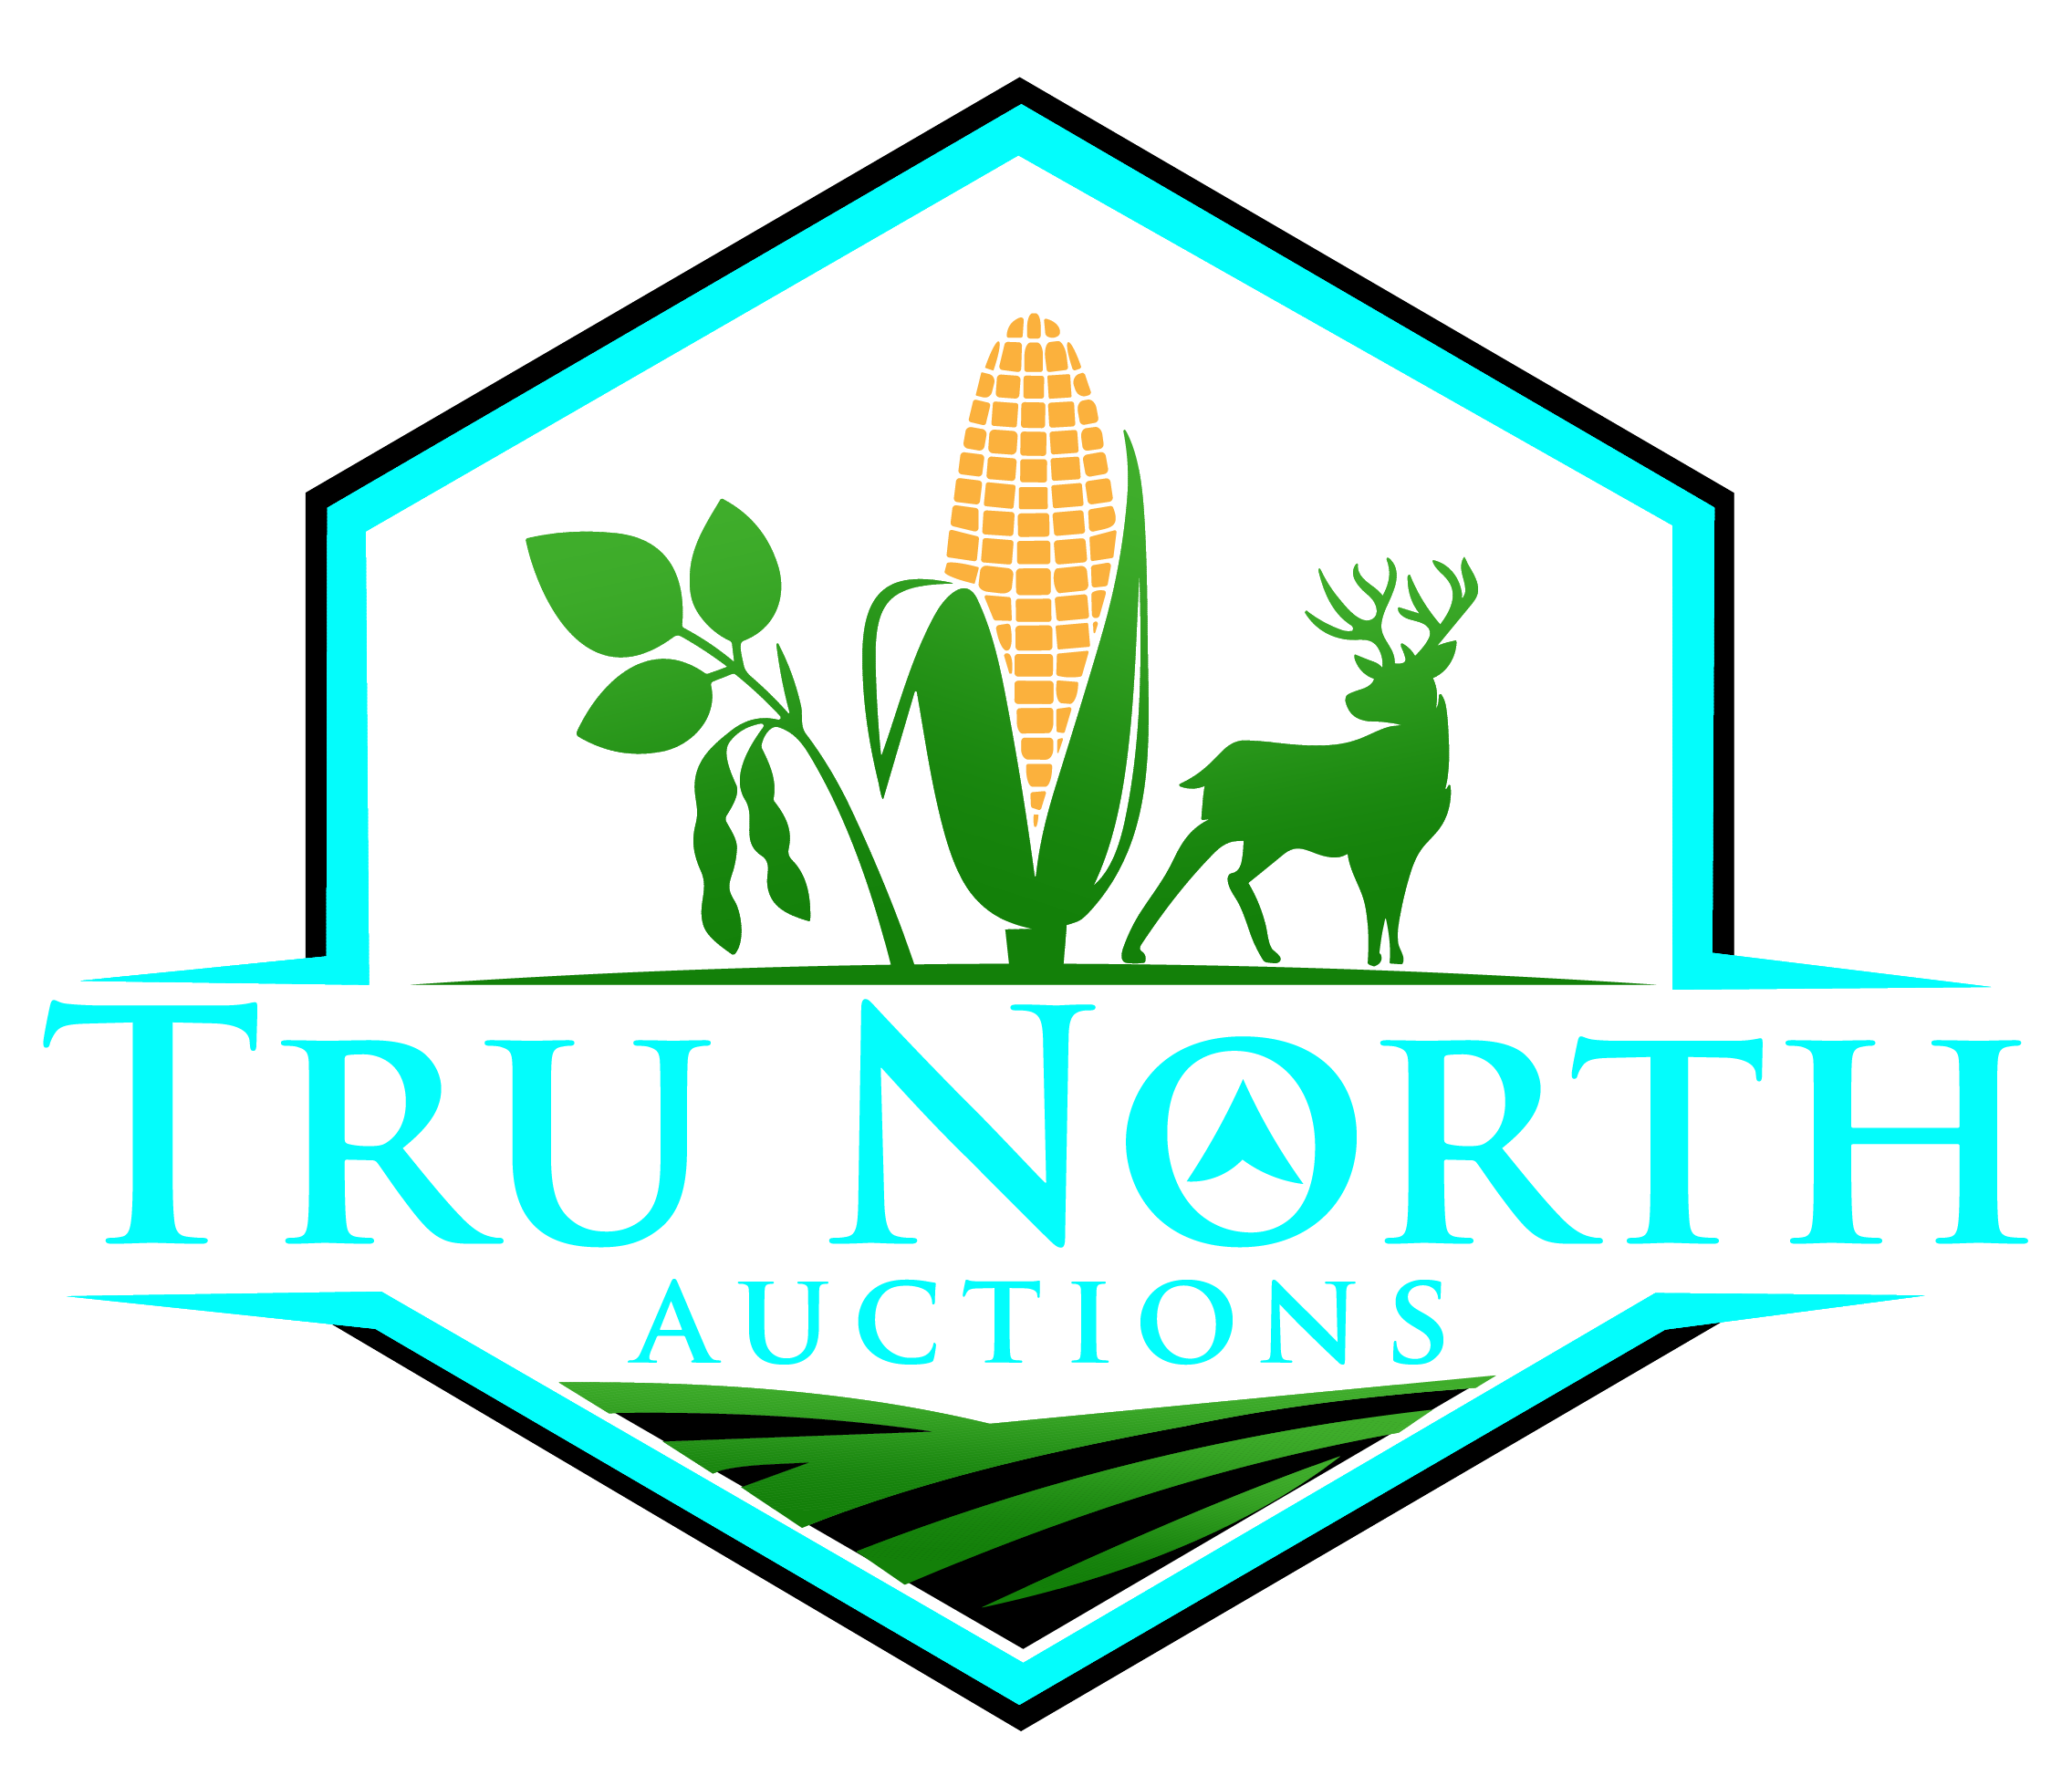 Tru North Auctions